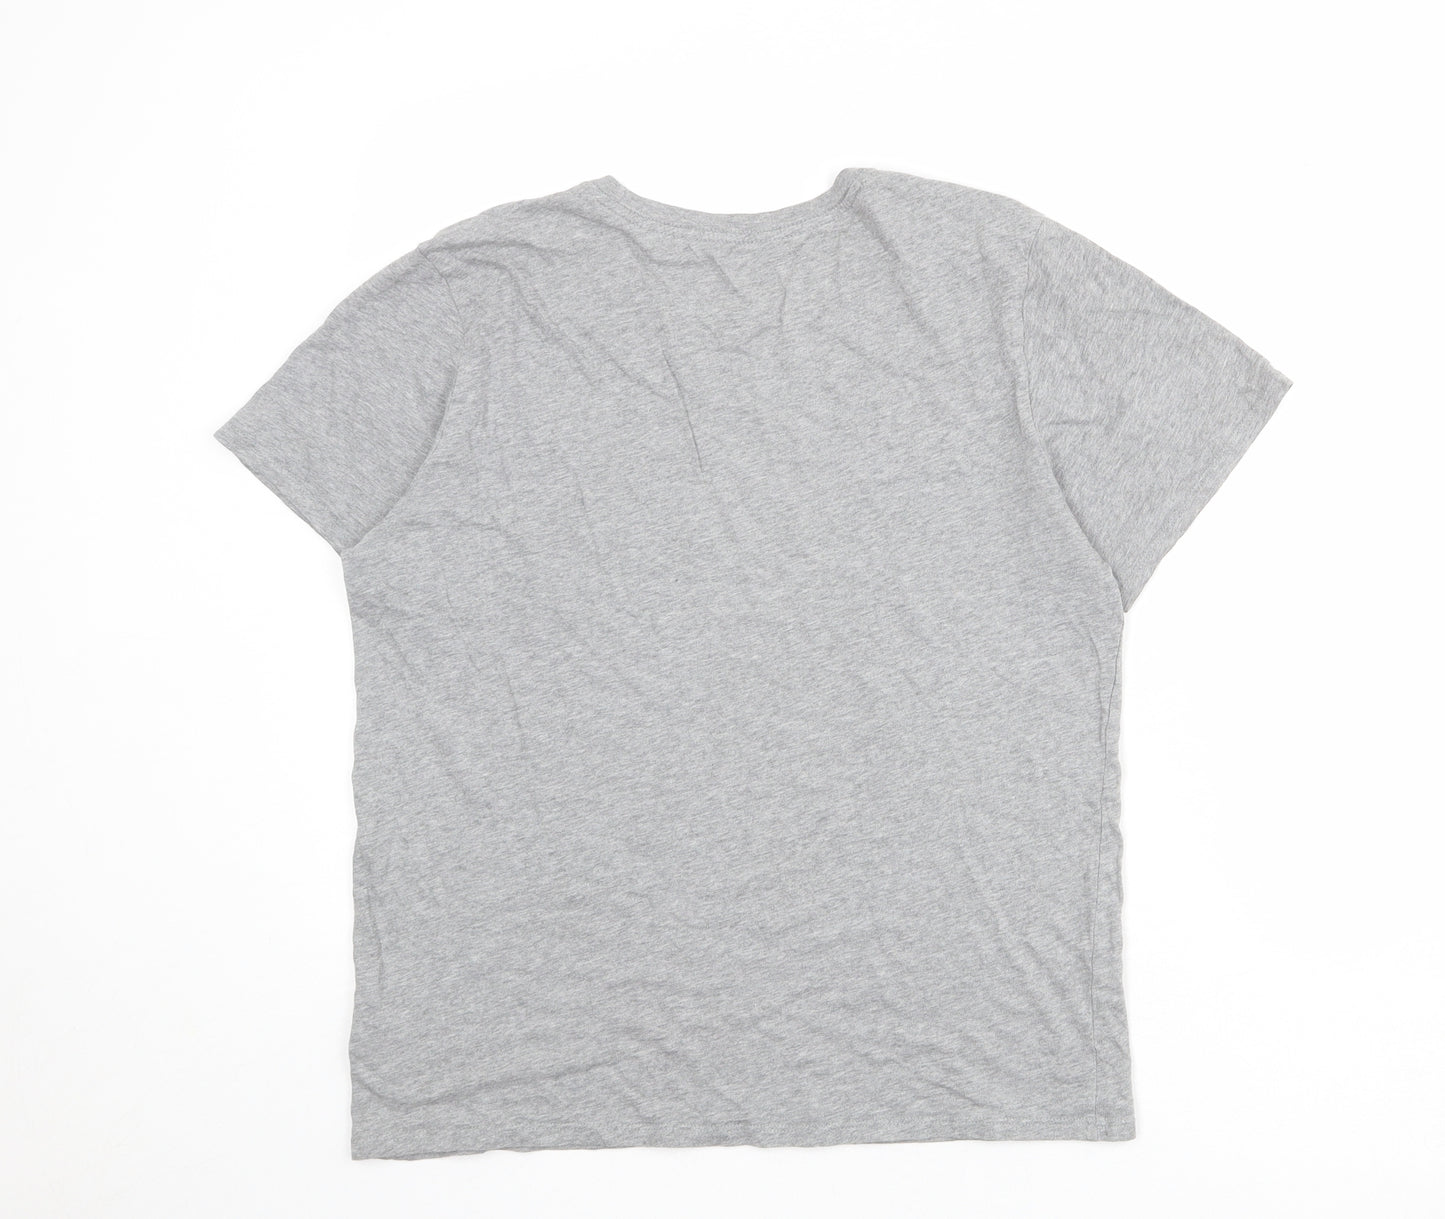 Nike Mens Grey Cotton T-Shirt Size M Round Neck